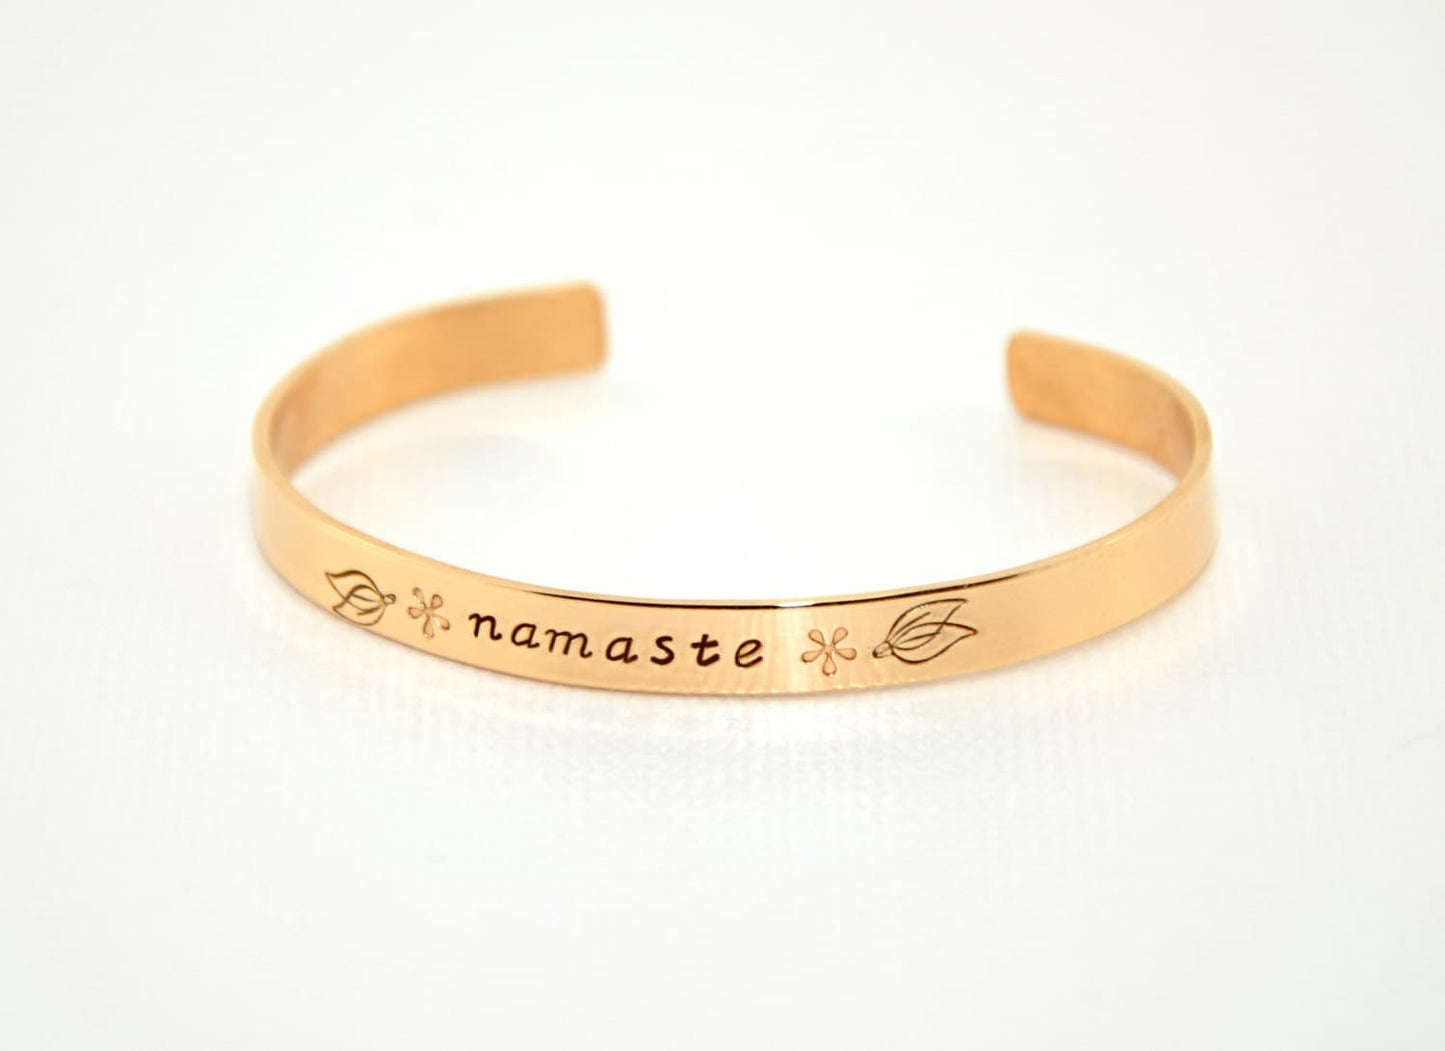 Namaste bronze cuff bracelet